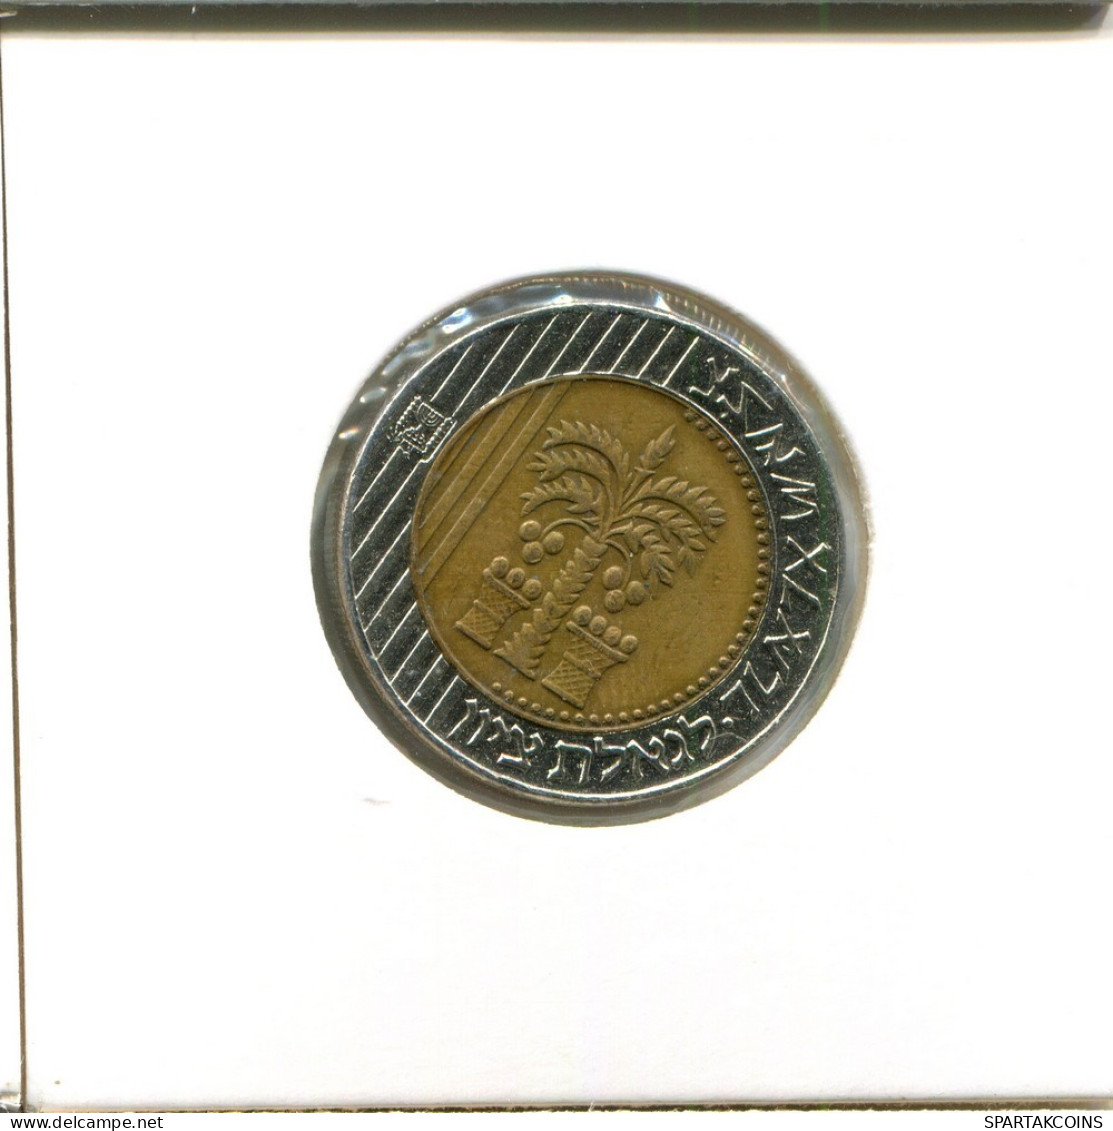 10 NEW SHEQALIM 1995 ISRAEL BIMETALLIC Münze #AT715.D.A - Israele